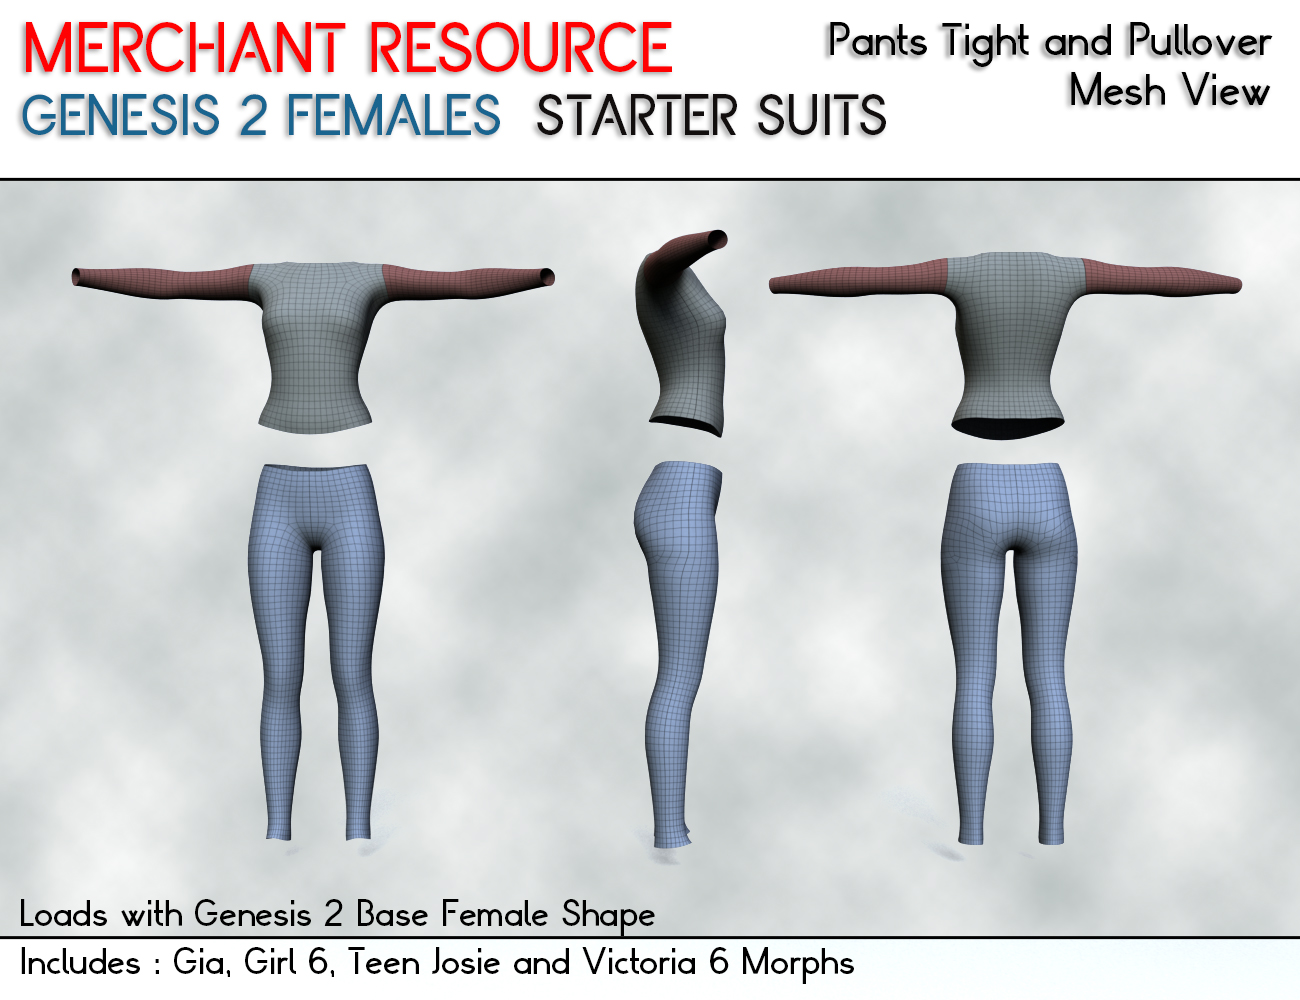 Merchant Resource Genesis 2 Females Starter Suits by: V3Digitimes, 3D Models by Daz 3D